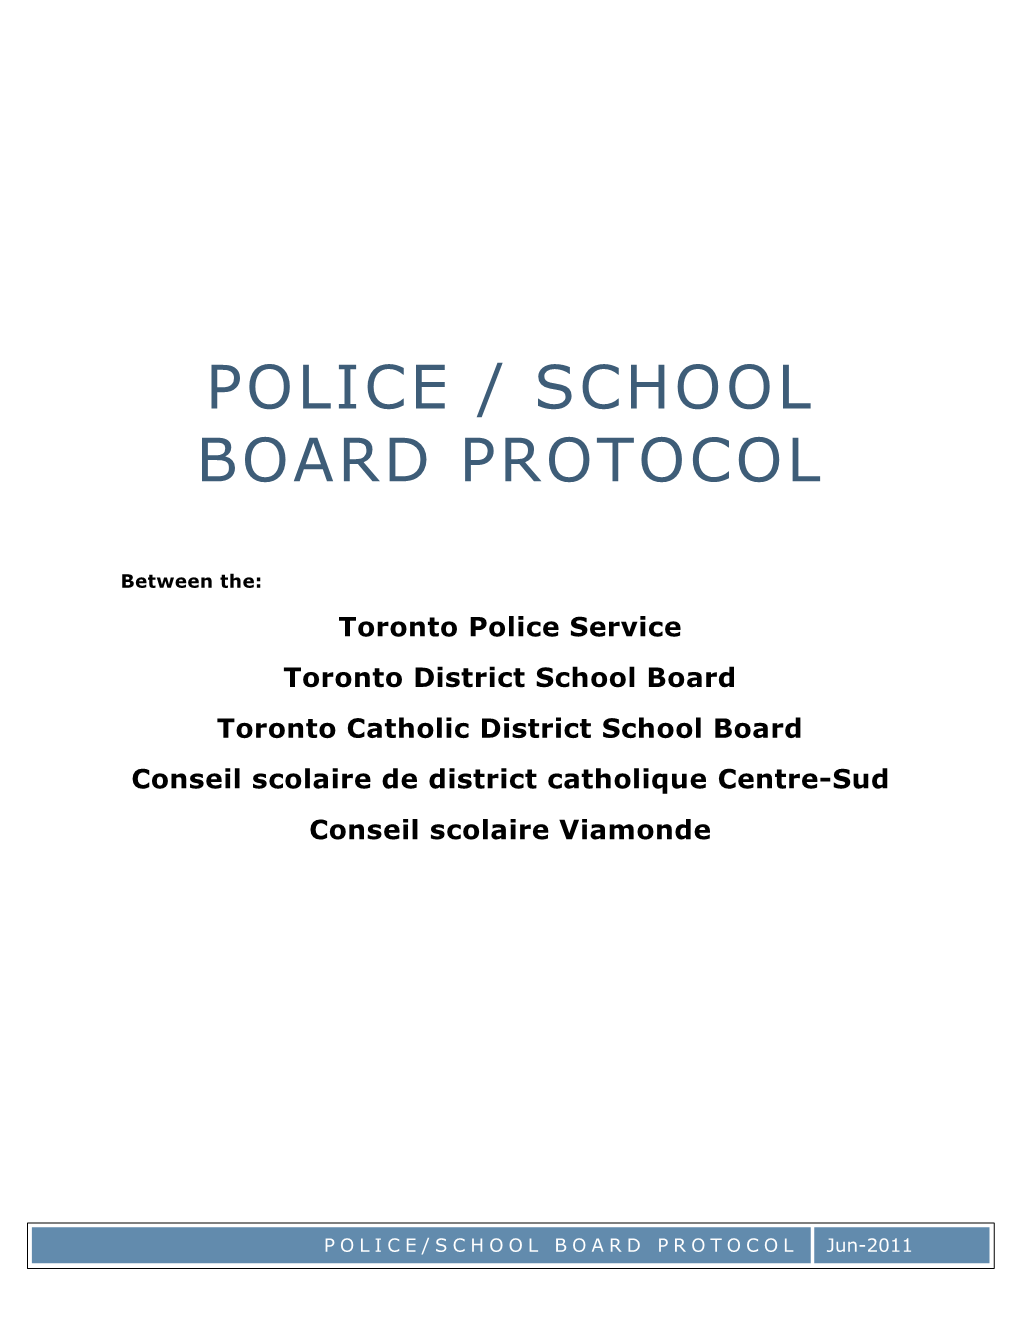 Police/School Board Protocol (Toronto Model)